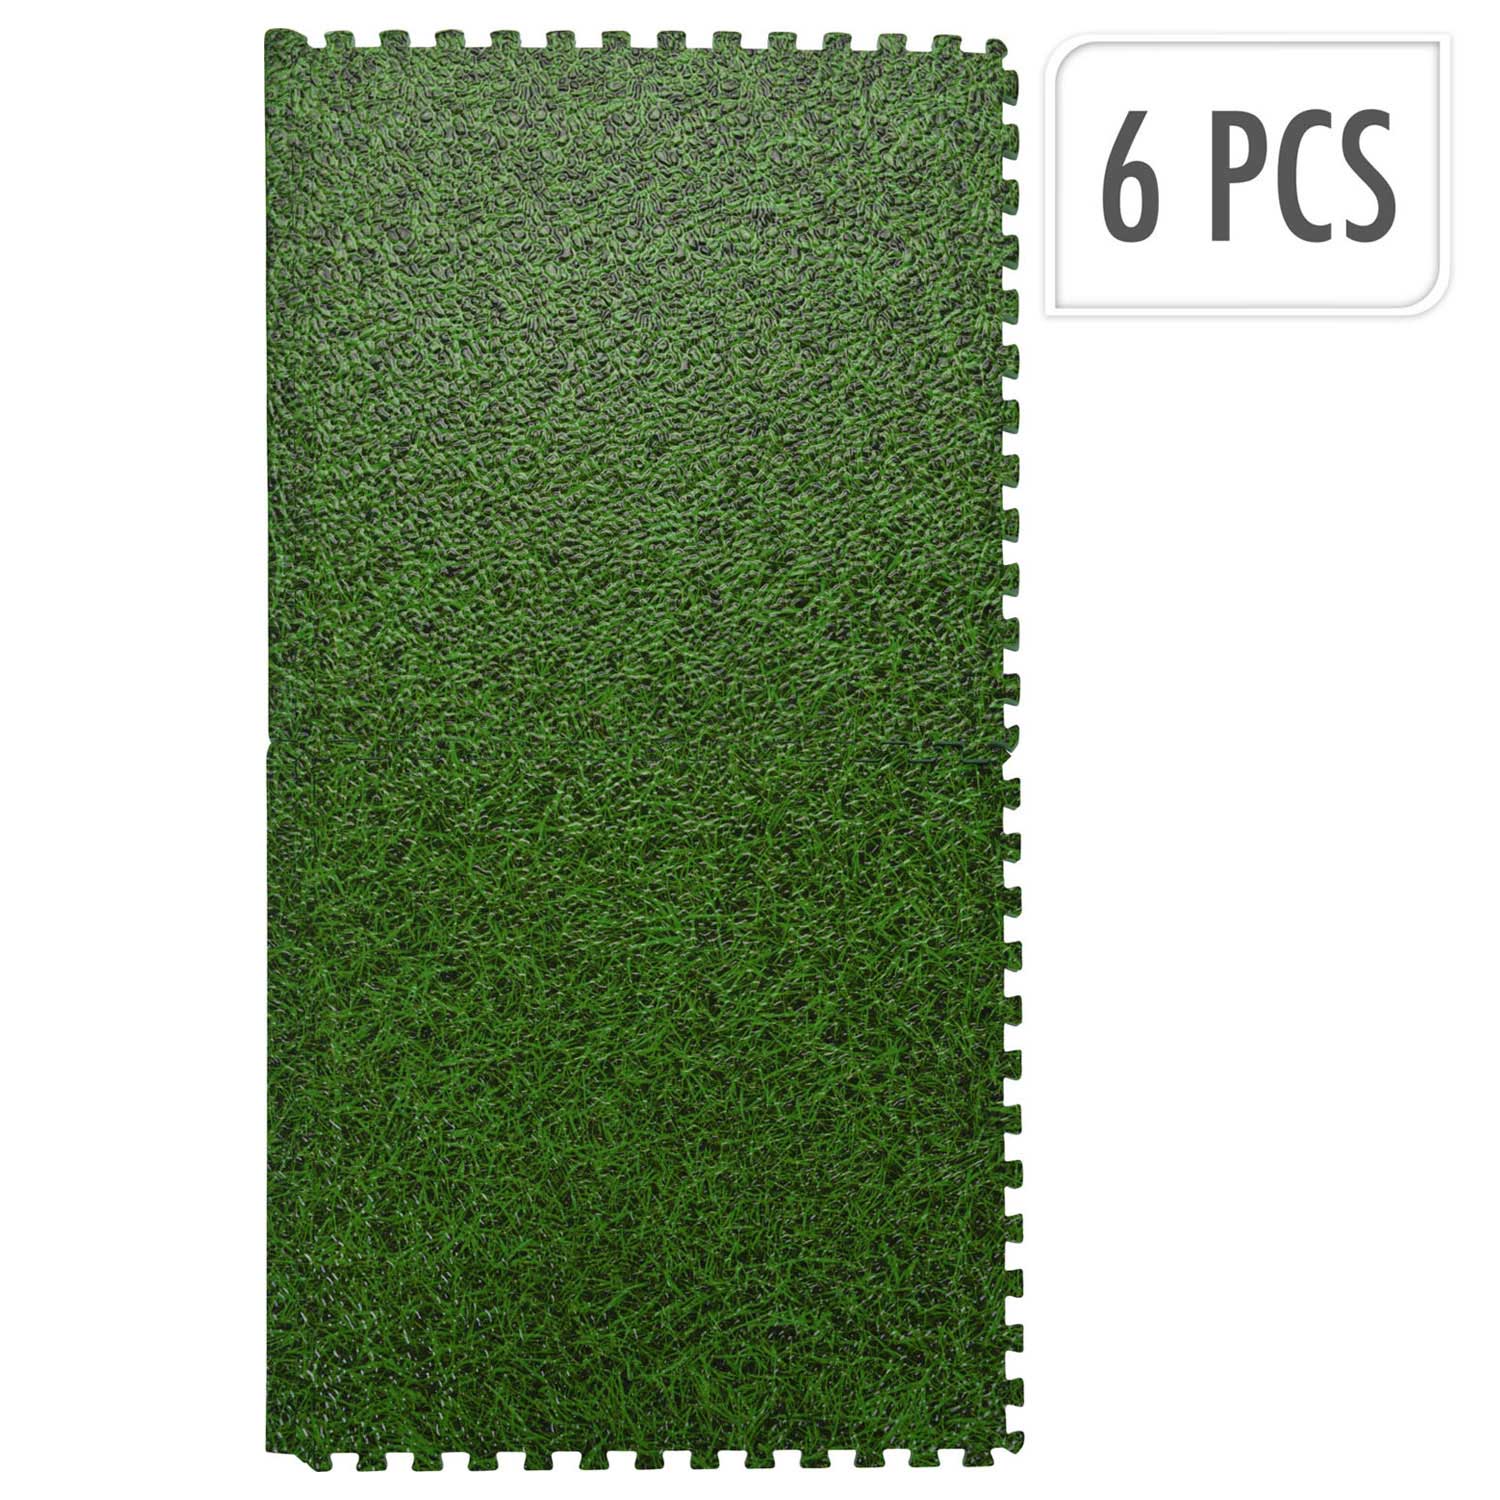 Ondertegels Grasprint, 40x40cm (6 stuks)